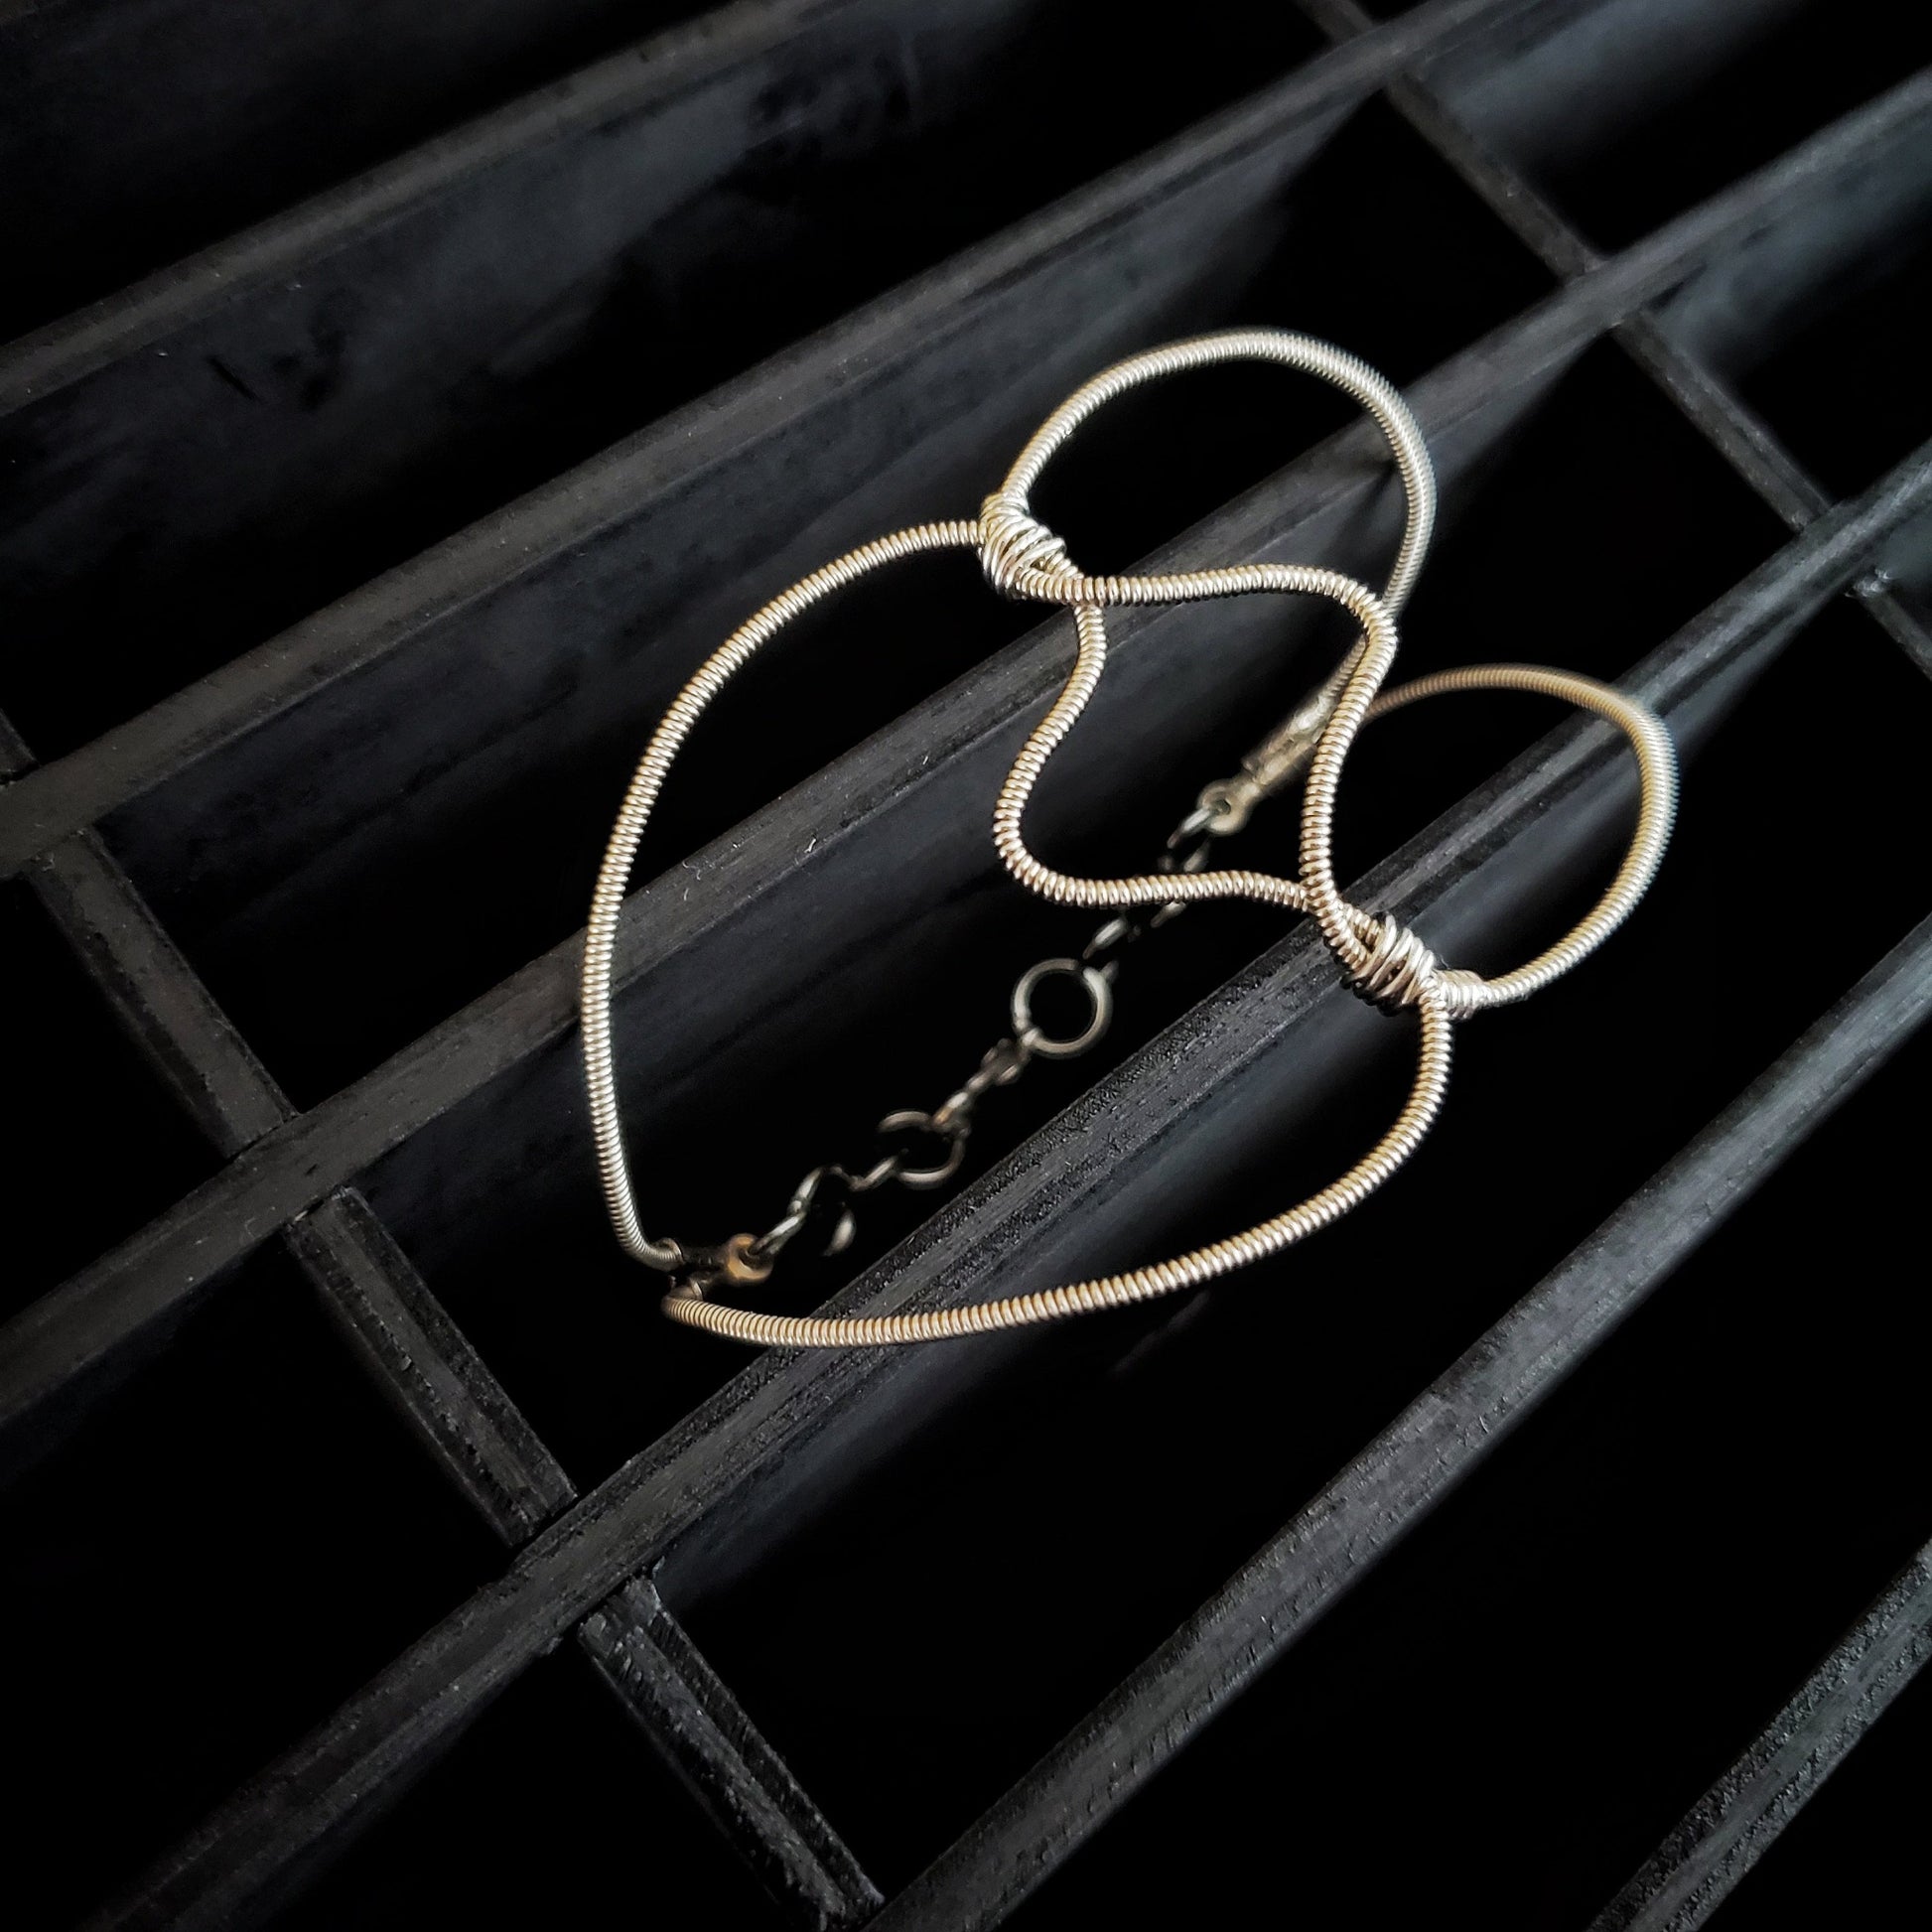 guitar string bracelet in the shape of a heart black background